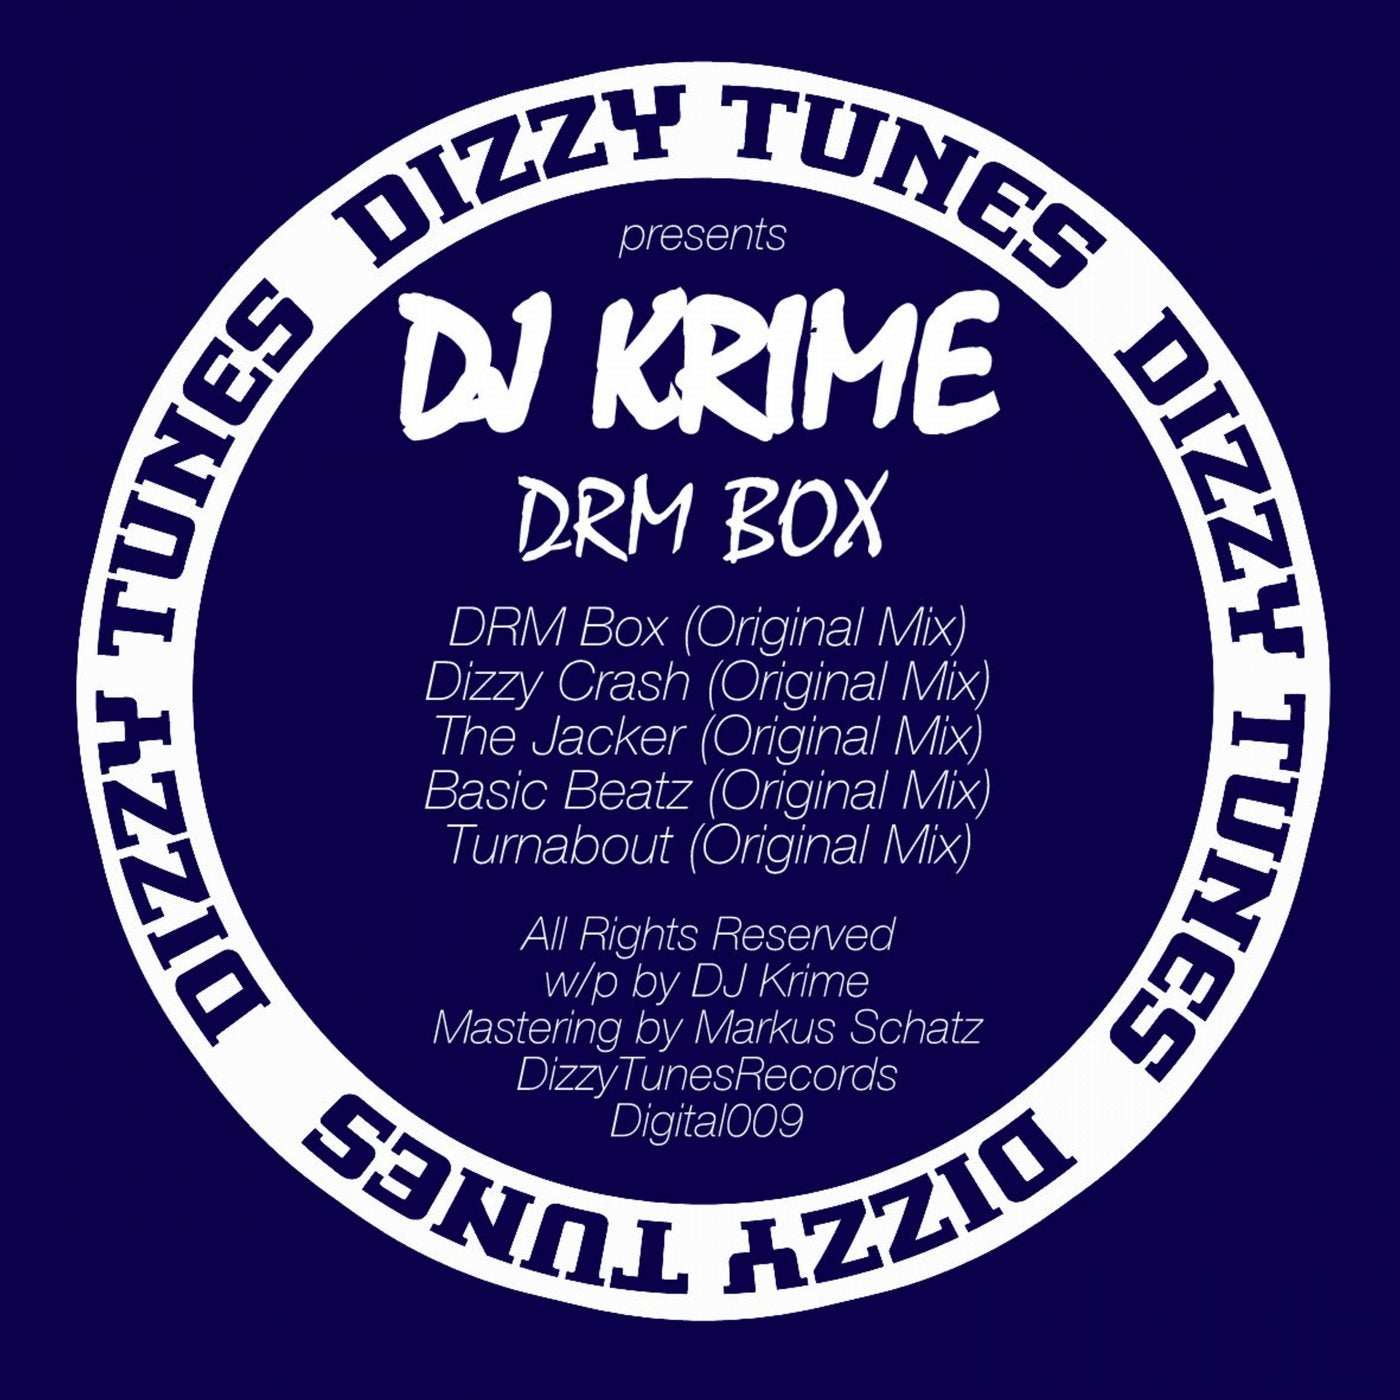 DRM Box